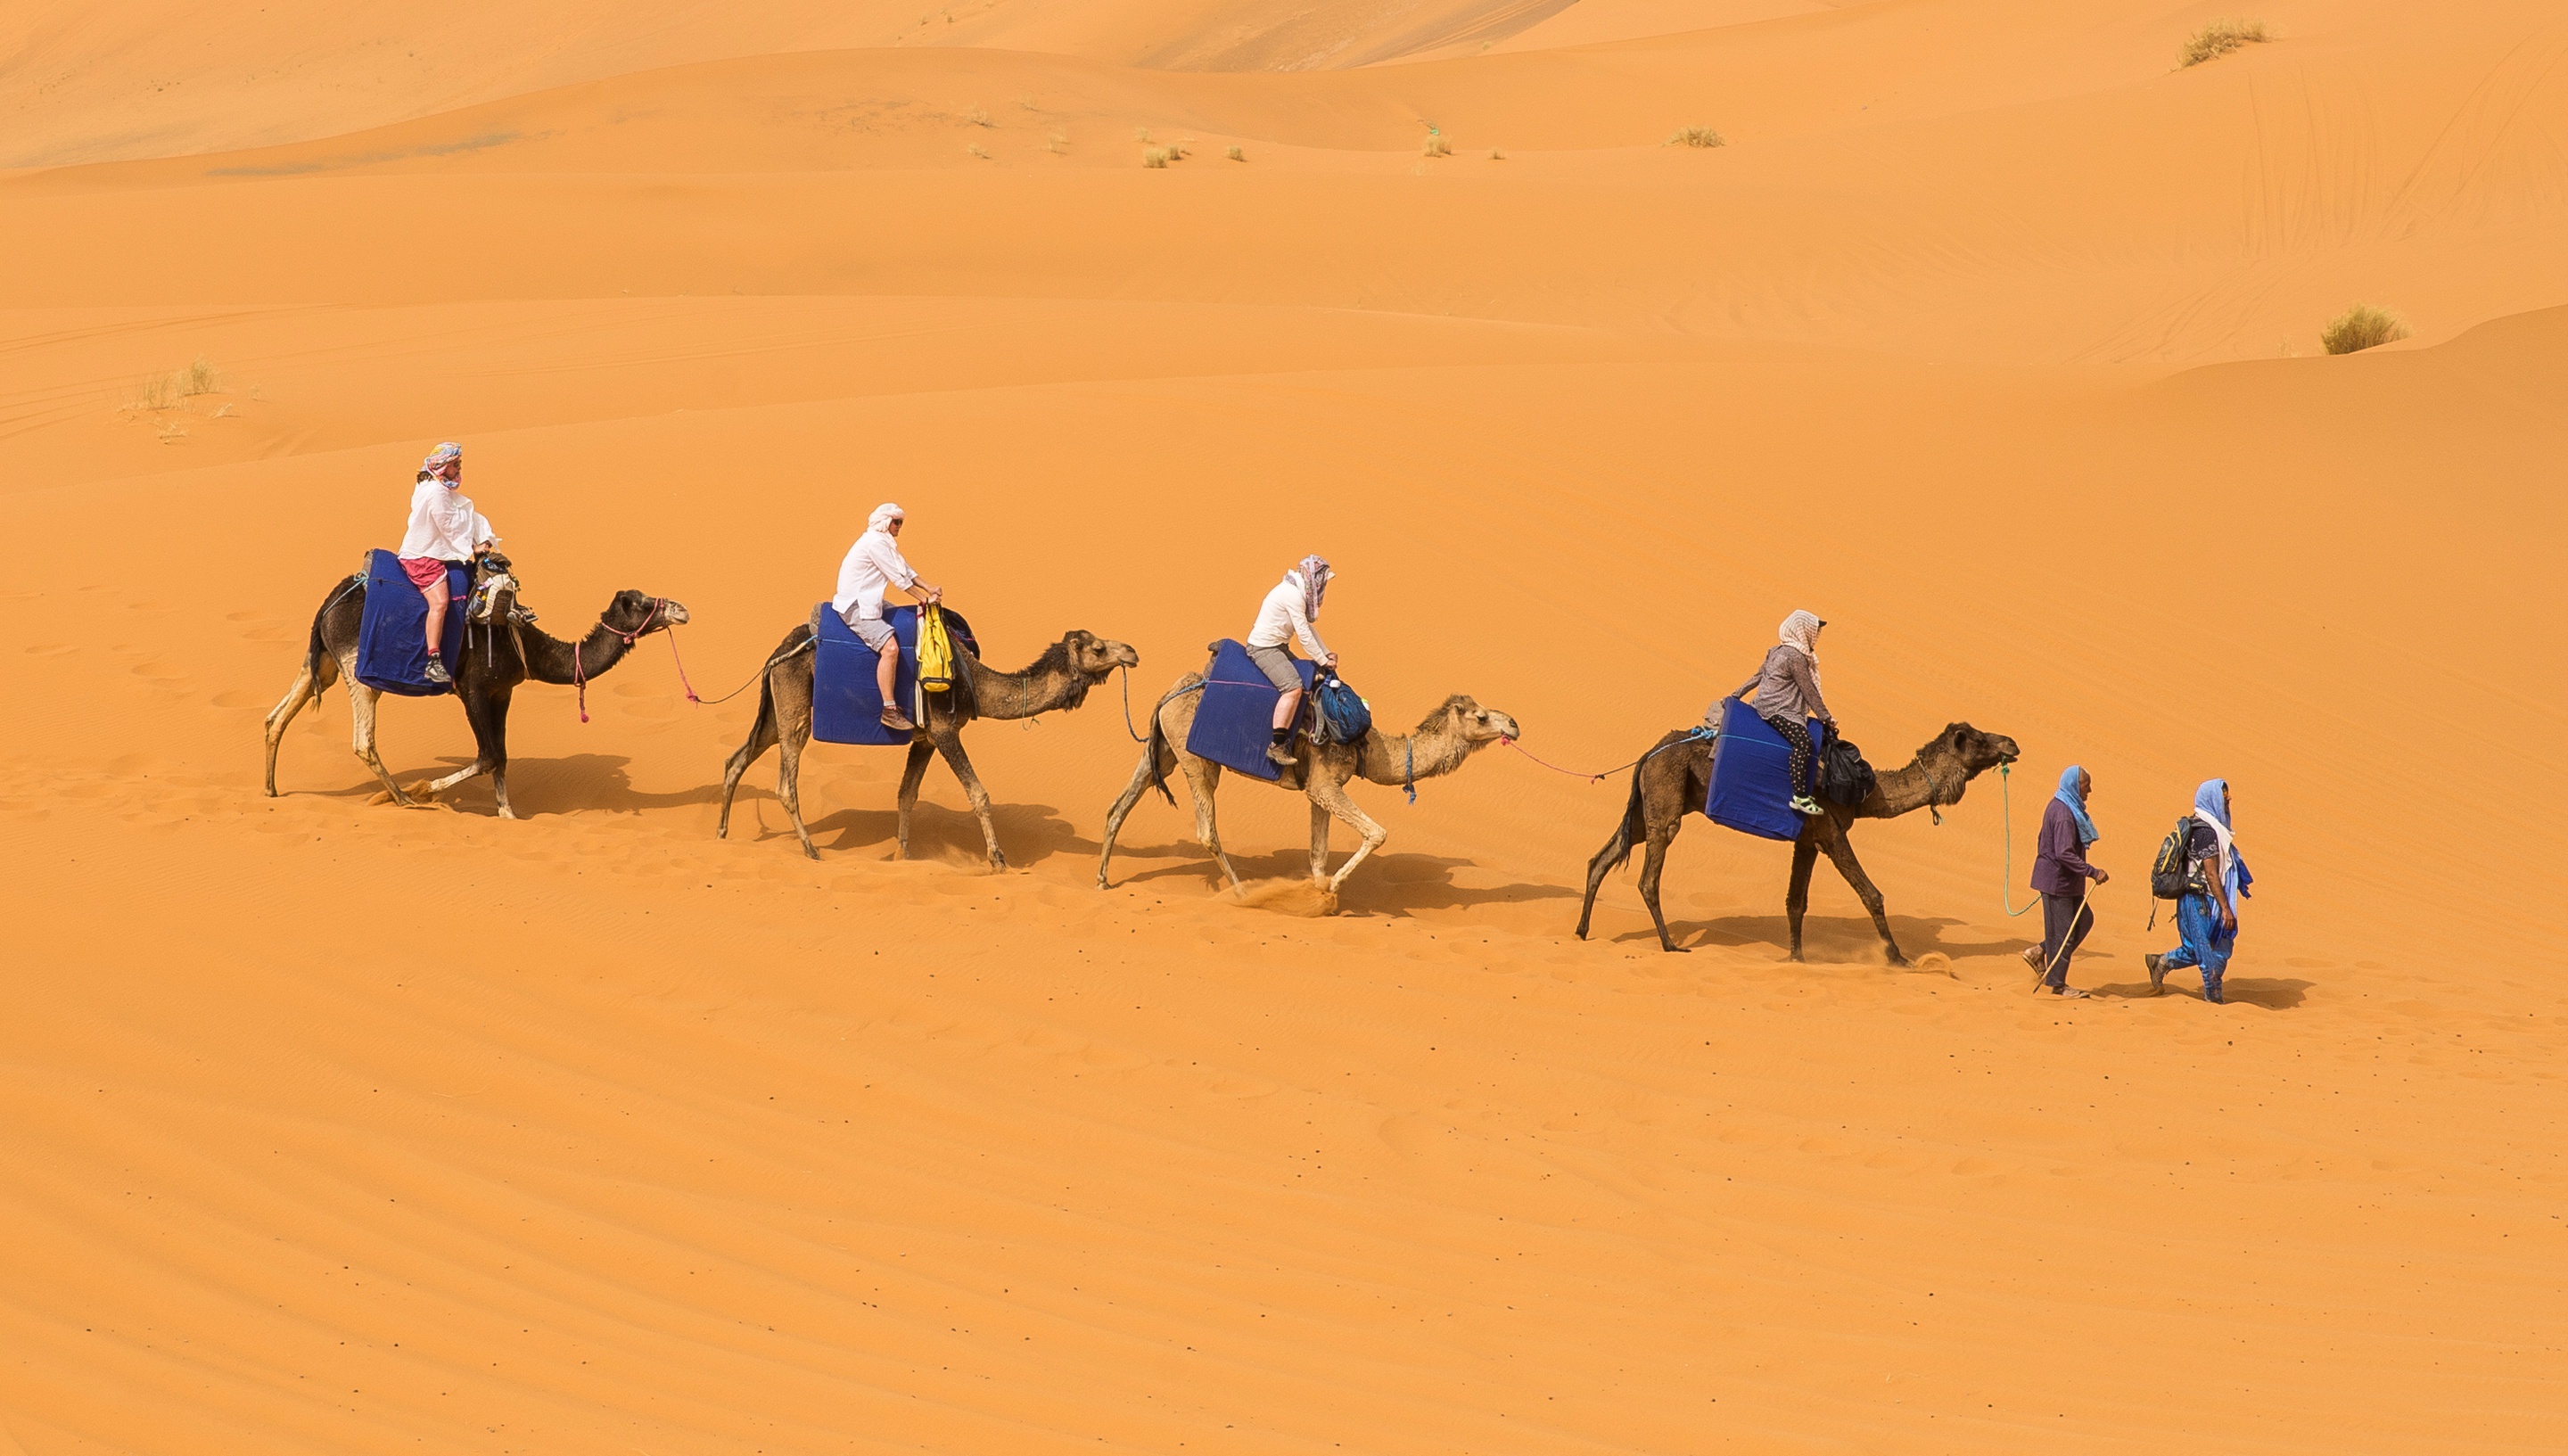 Люди каравана. Мехари верблюд. Бедуин на верблюде. Караван с верблюдами в пустыне. Бедуин с верблюдом в пустыне.